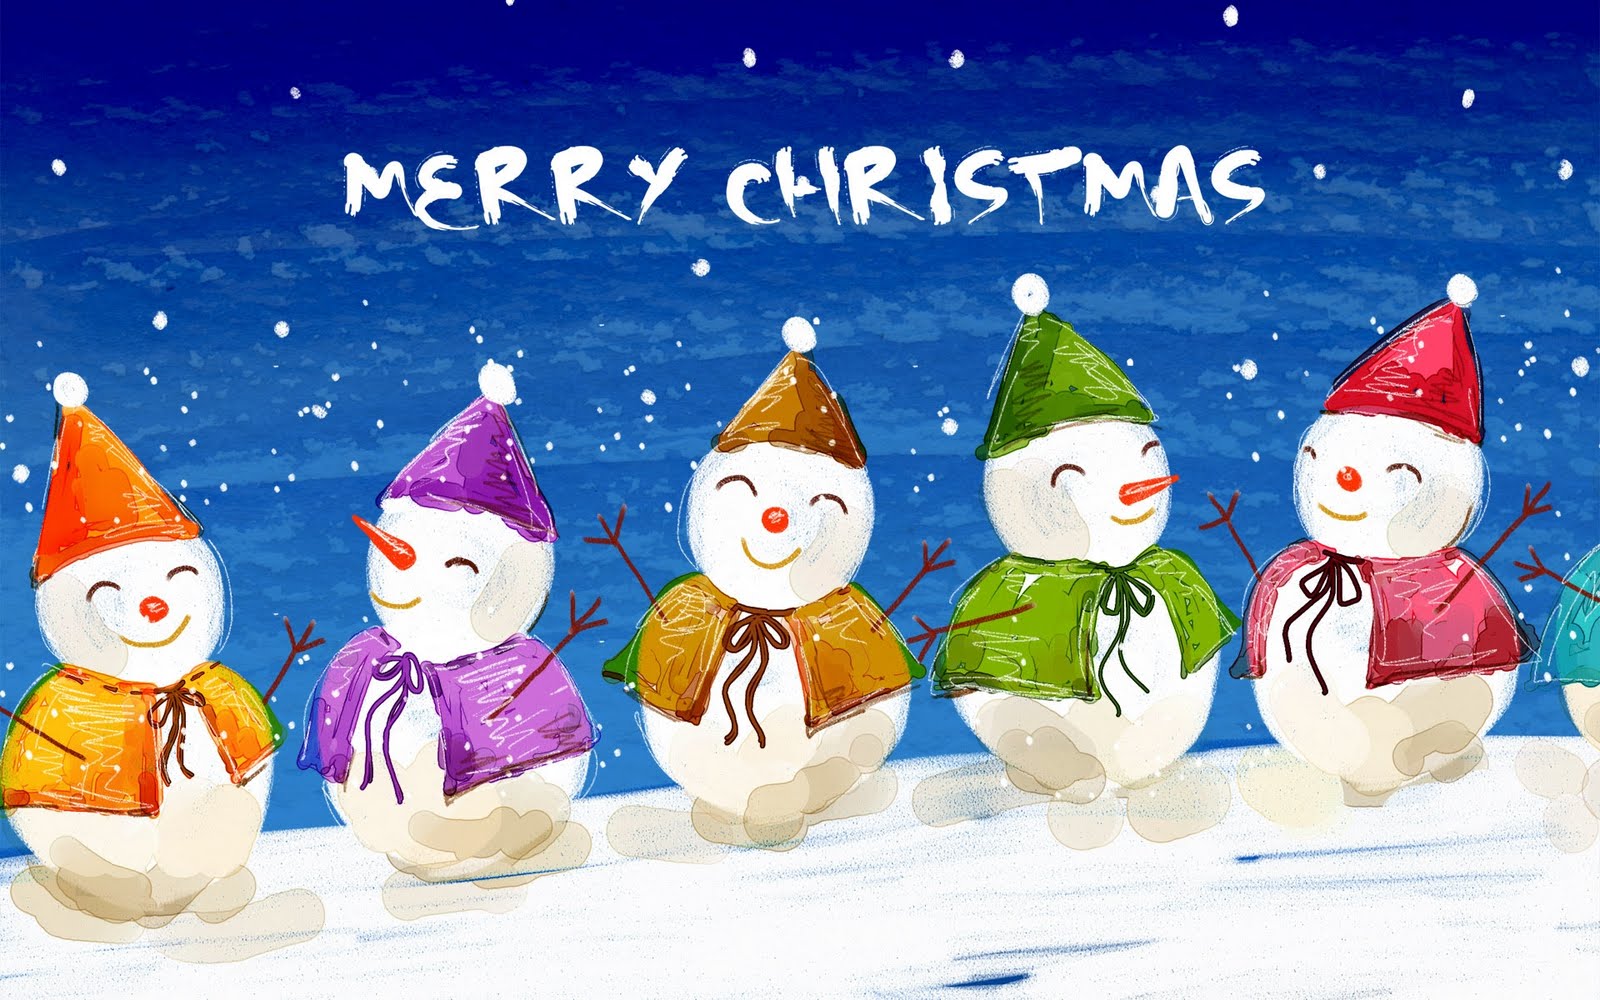 https://blogger.googleusercontent.com/img/b/R29vZ2xl/AVvXsEhe95_QkSF0QXrjzM8LI77VhJ0M3HVp8oCoMC3iX6rBGLfEPRJIGKdQuZ4bBVTo6vWWOMkM4aFCTTdM79s29vcVtKDx5vexis1YyZDppvr9Zw89It2hpWwMQaFD6pGMxs9IiOanM-Kc-xo/s1600/merry-christmas-everyone-feliz-navidad-para-todos.jpg